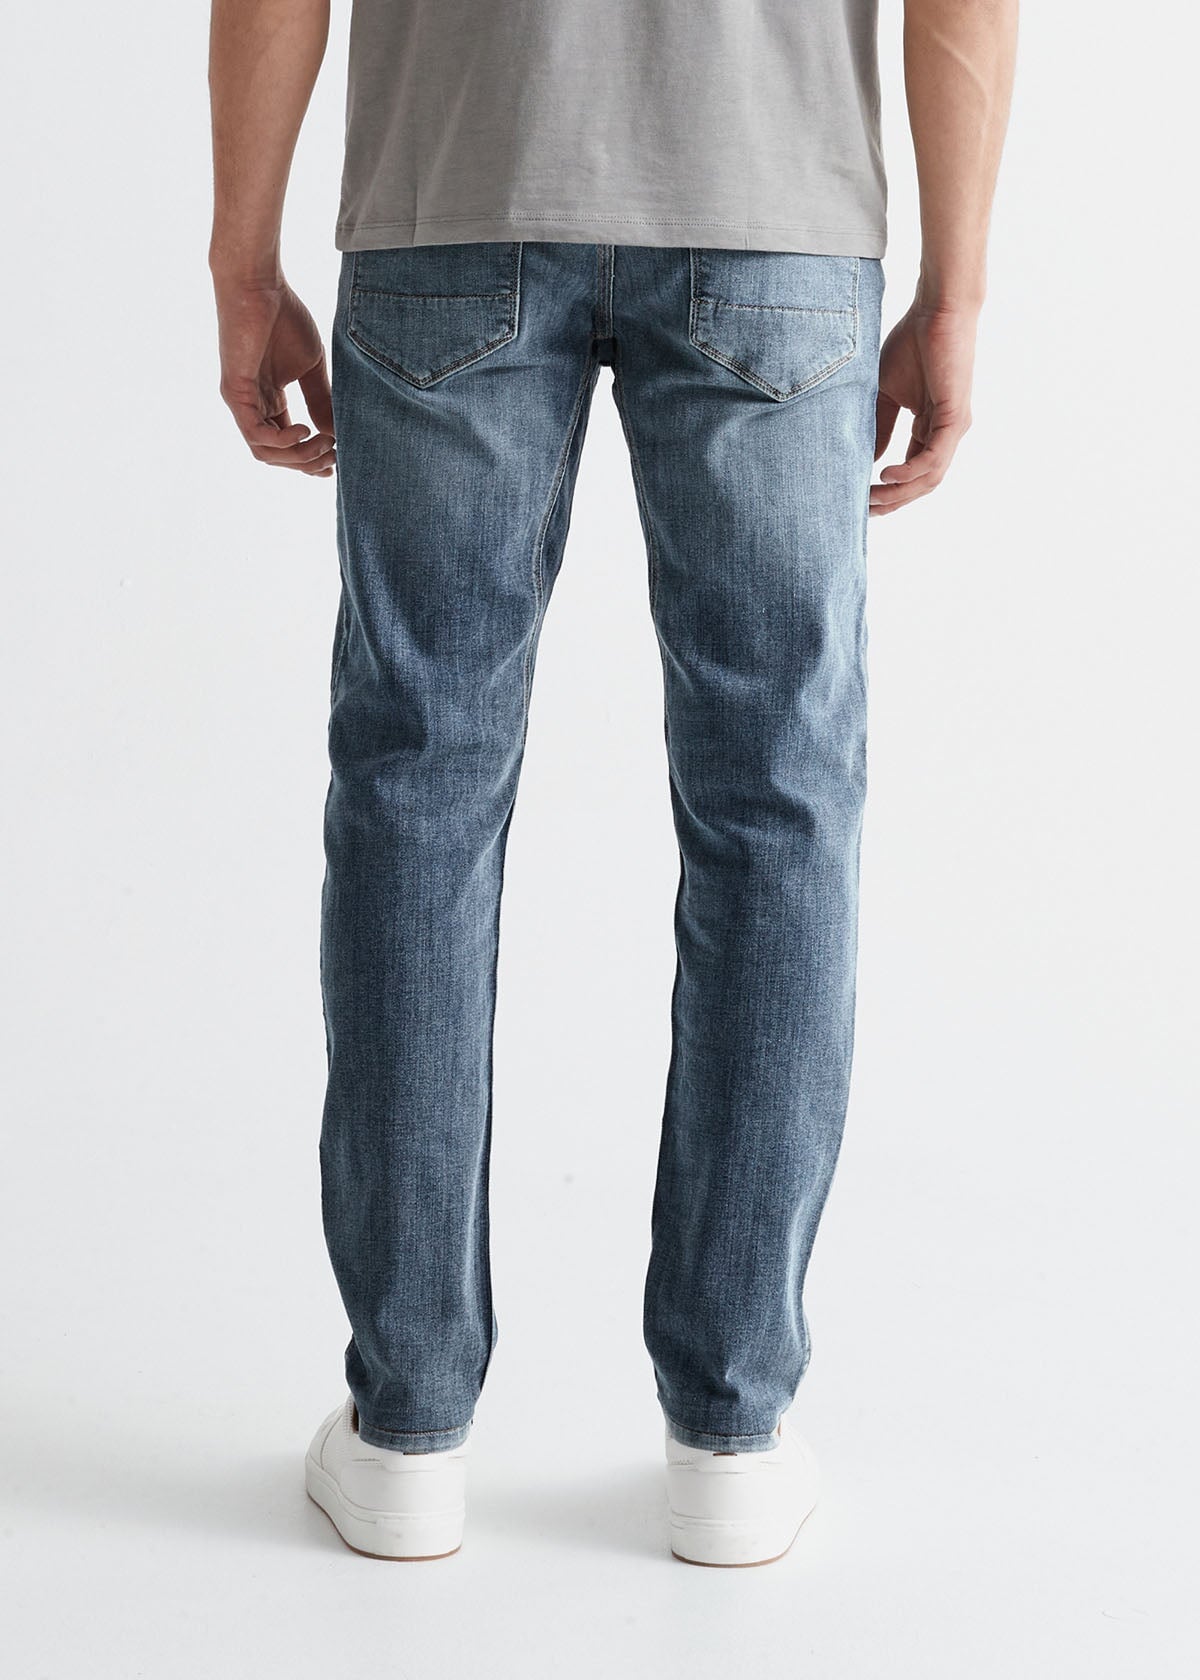 I-10 Jeans Casual Wear Mens Blue Denim Jeans, Waist Size: 28-32